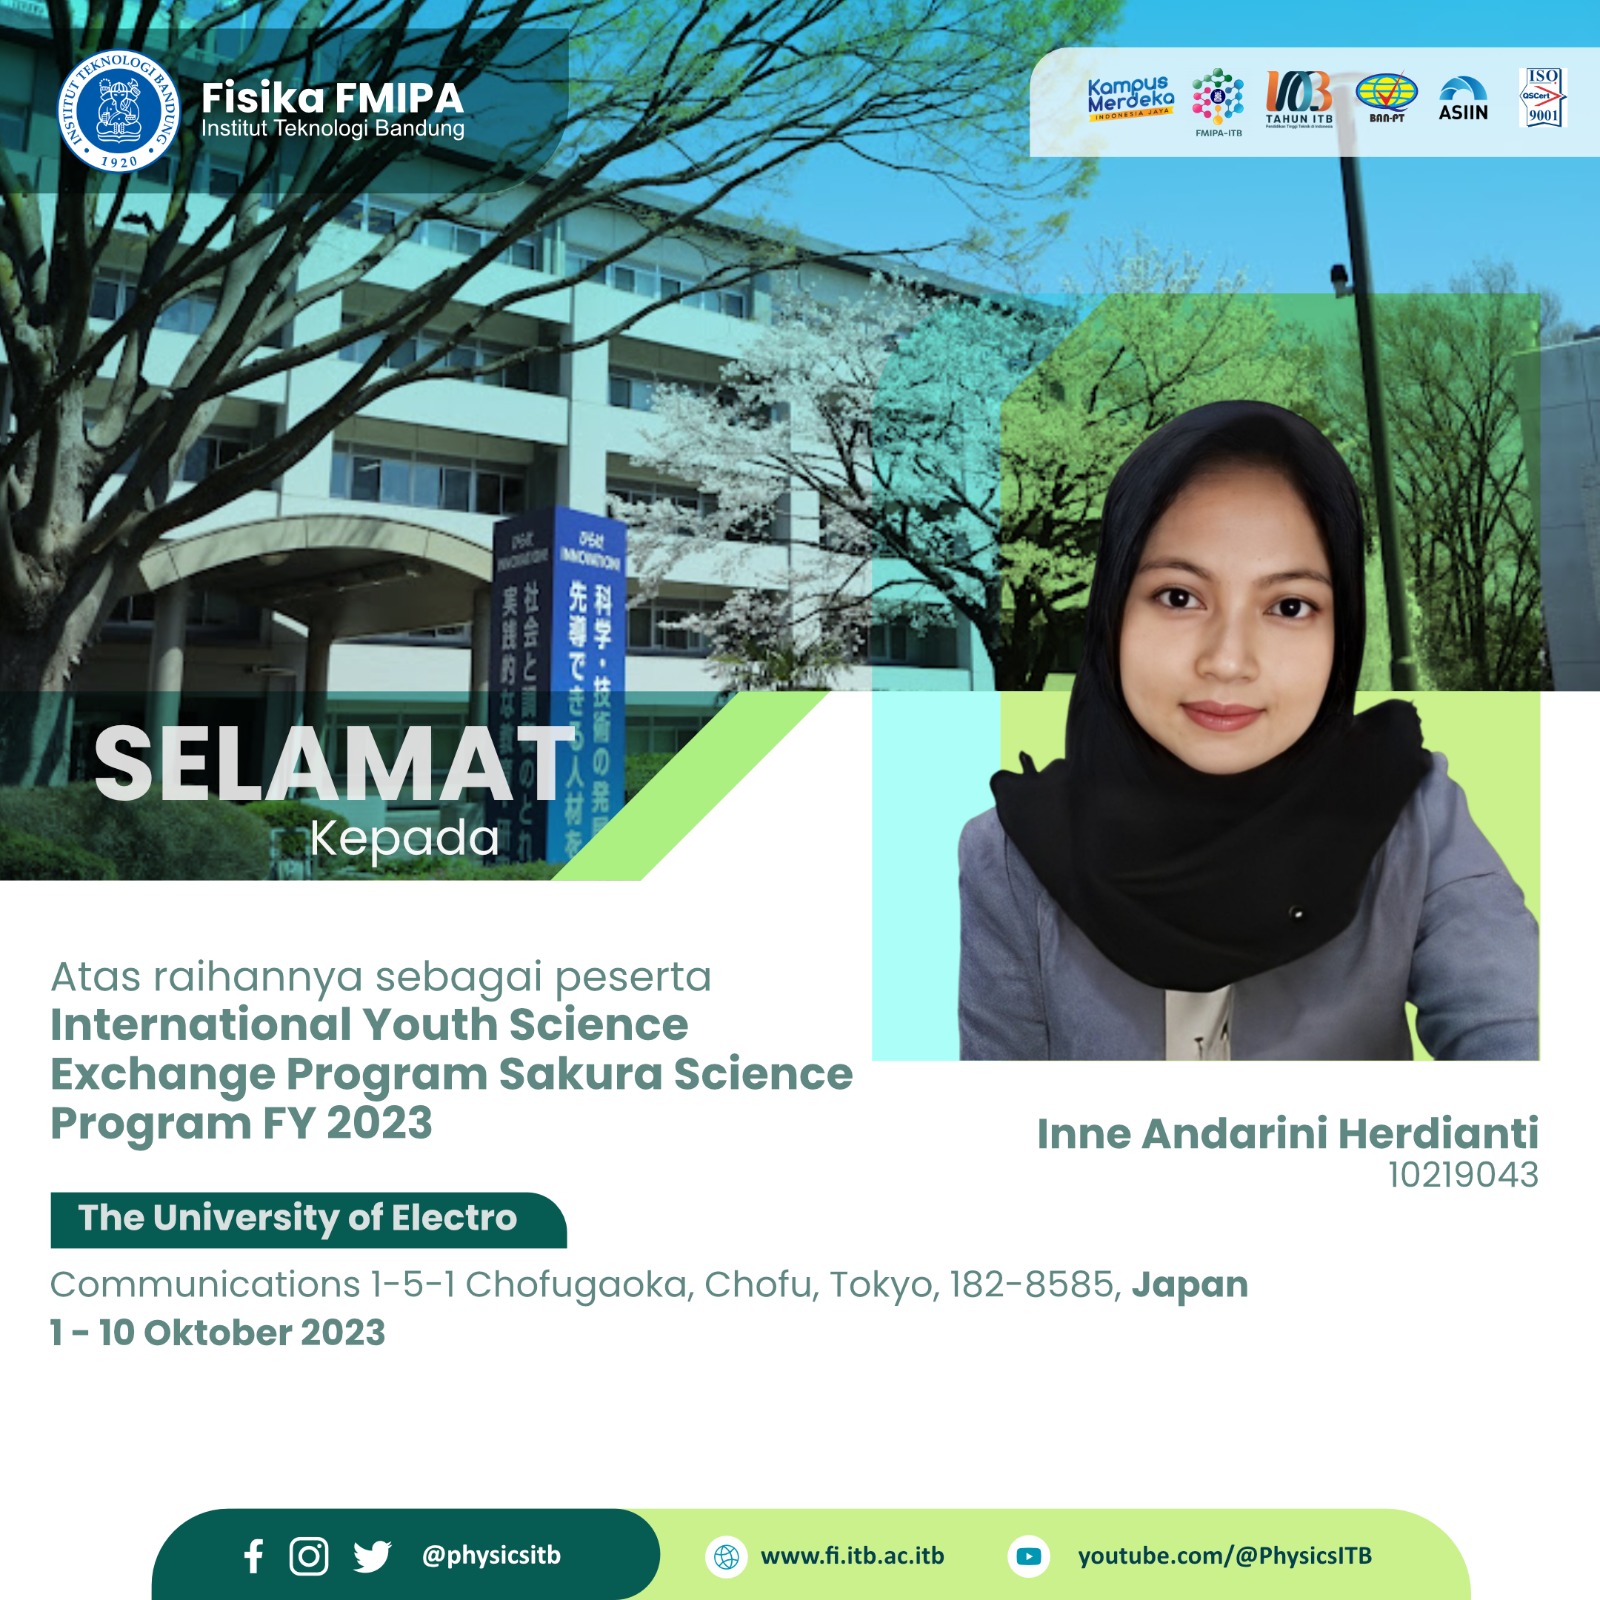 International Youth Science Exchange Program Sakura Science Program FY 2023